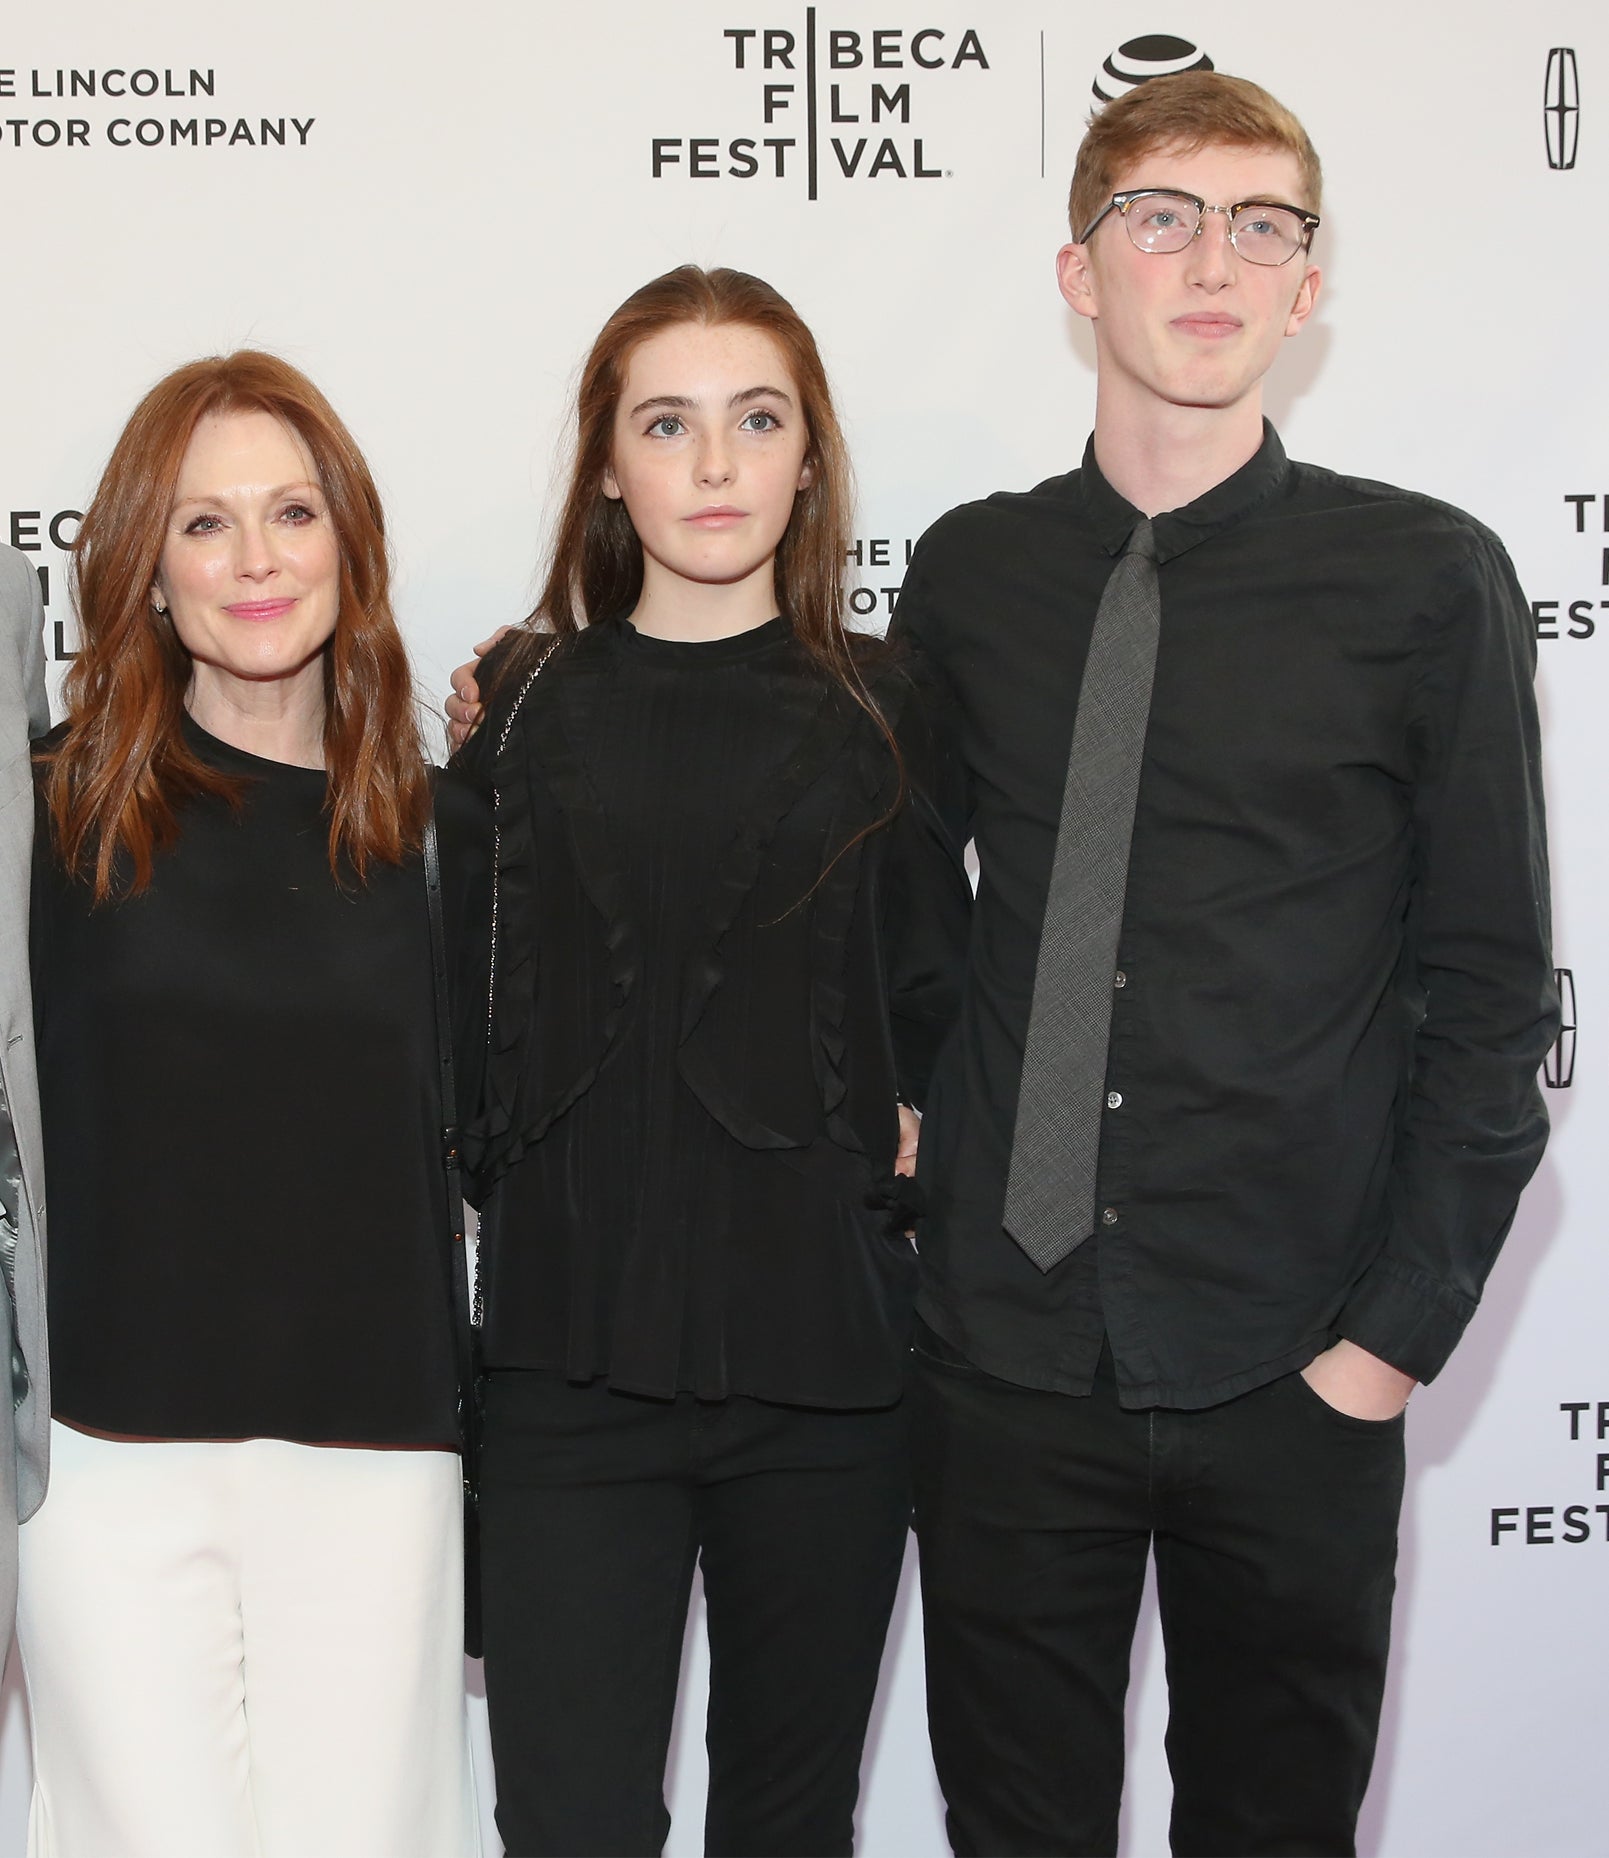 Julianne, Liv, and Caleb together at Tribeca Film Festival